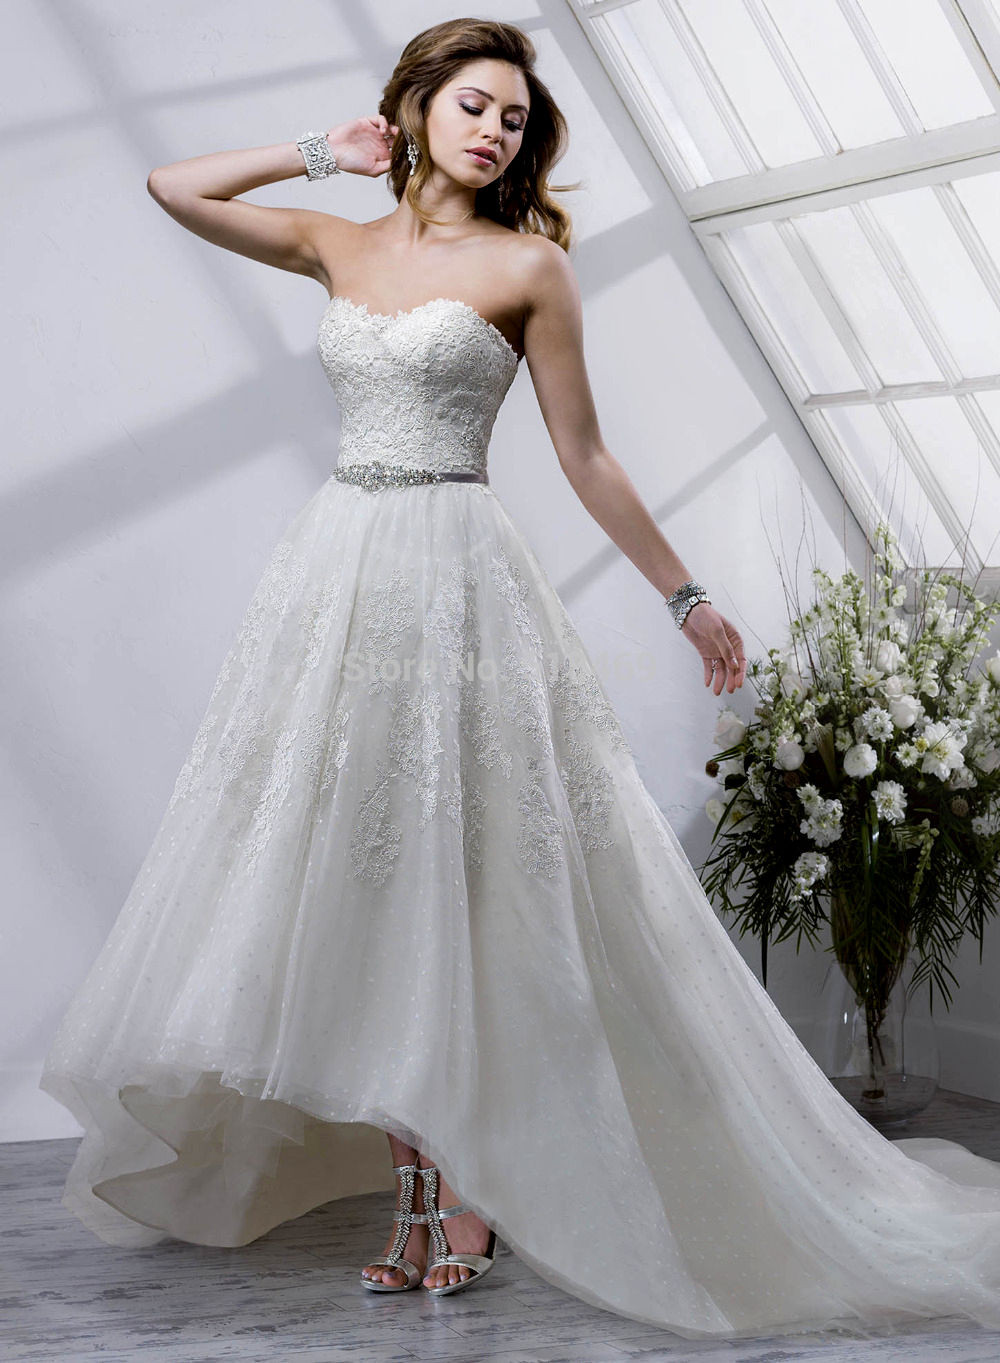 Macys Wedding Gowns
 Dress & Gown Adorable Macys Wedding Dresses That Will